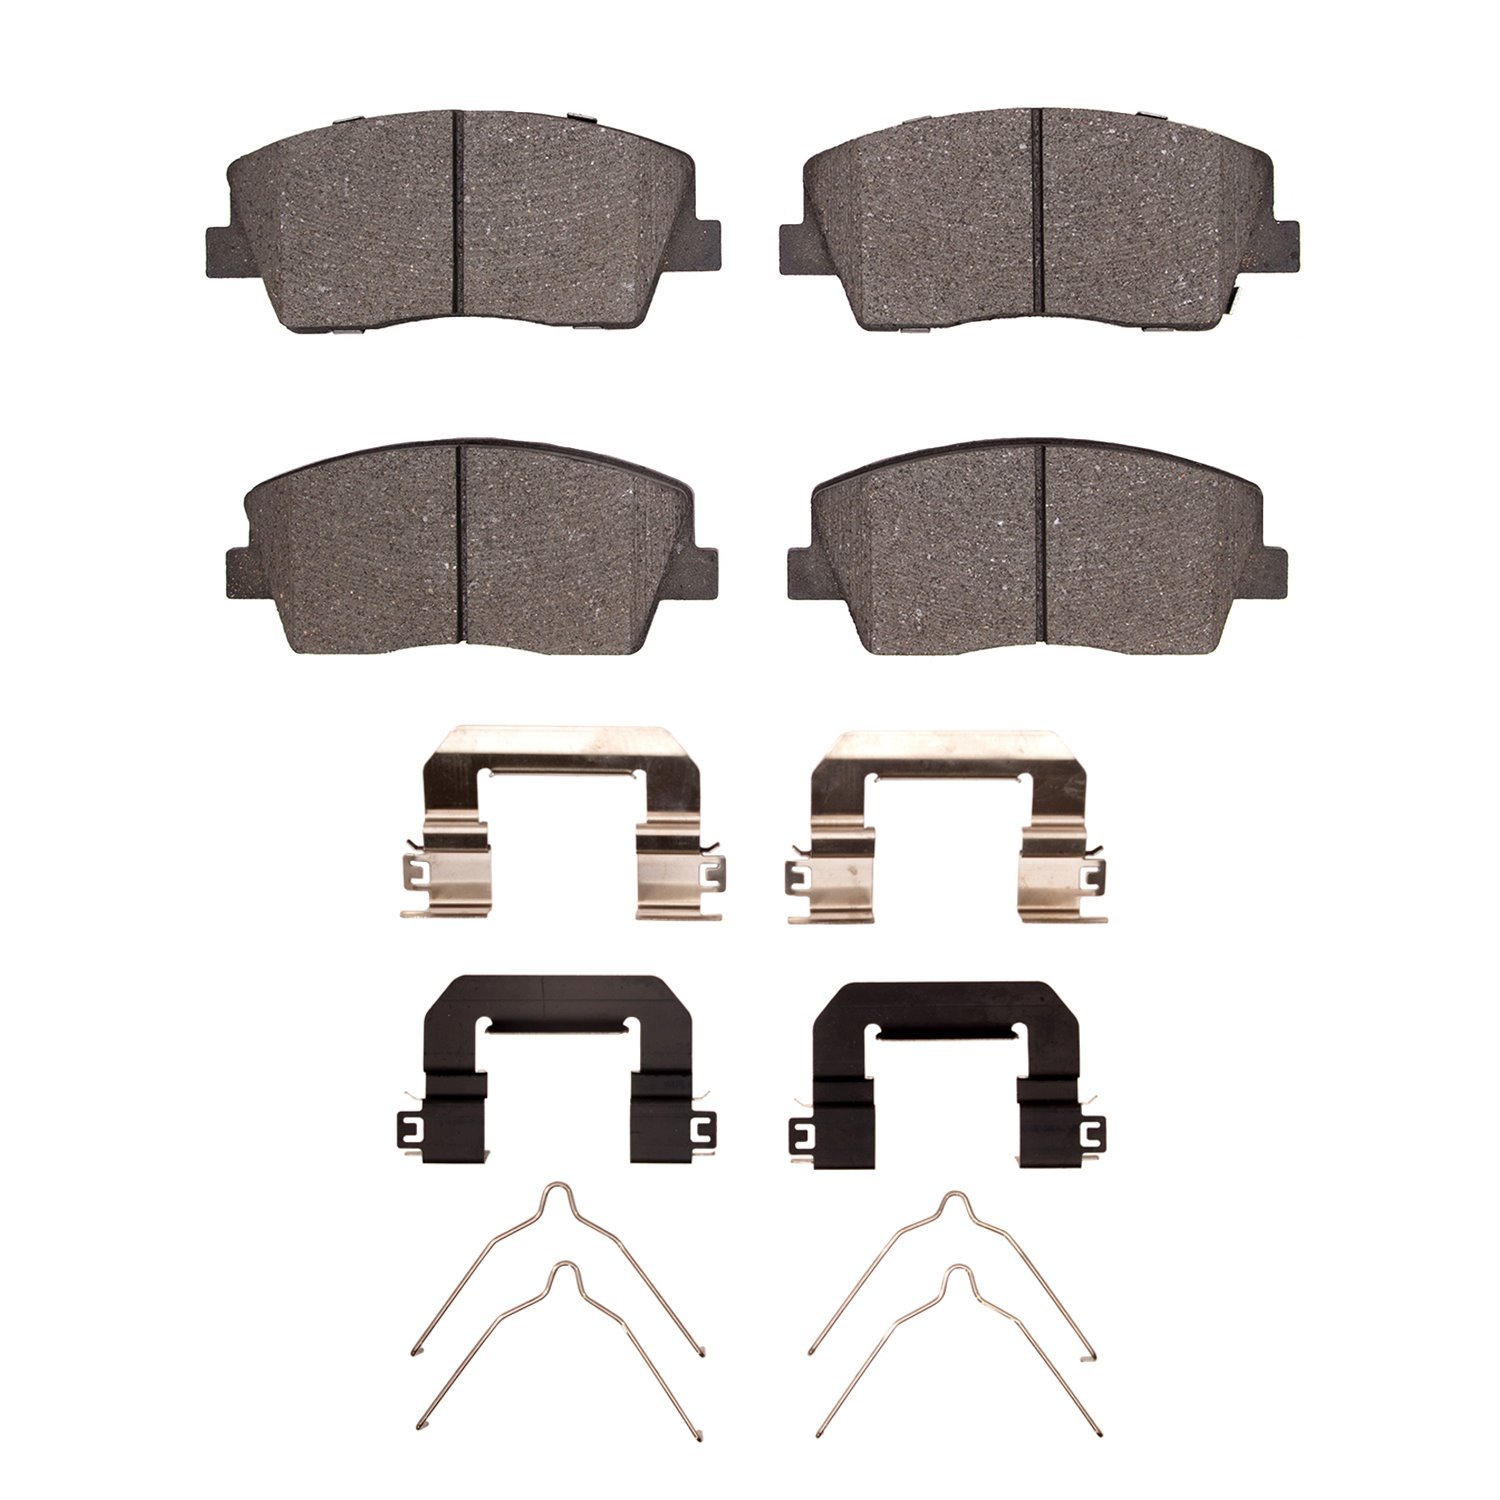 1310-2117-01 3000-Series Ceramic Brake Pads & Hardware Kit, Fits Select Kia/Hyundai/Genesis, Position: Front